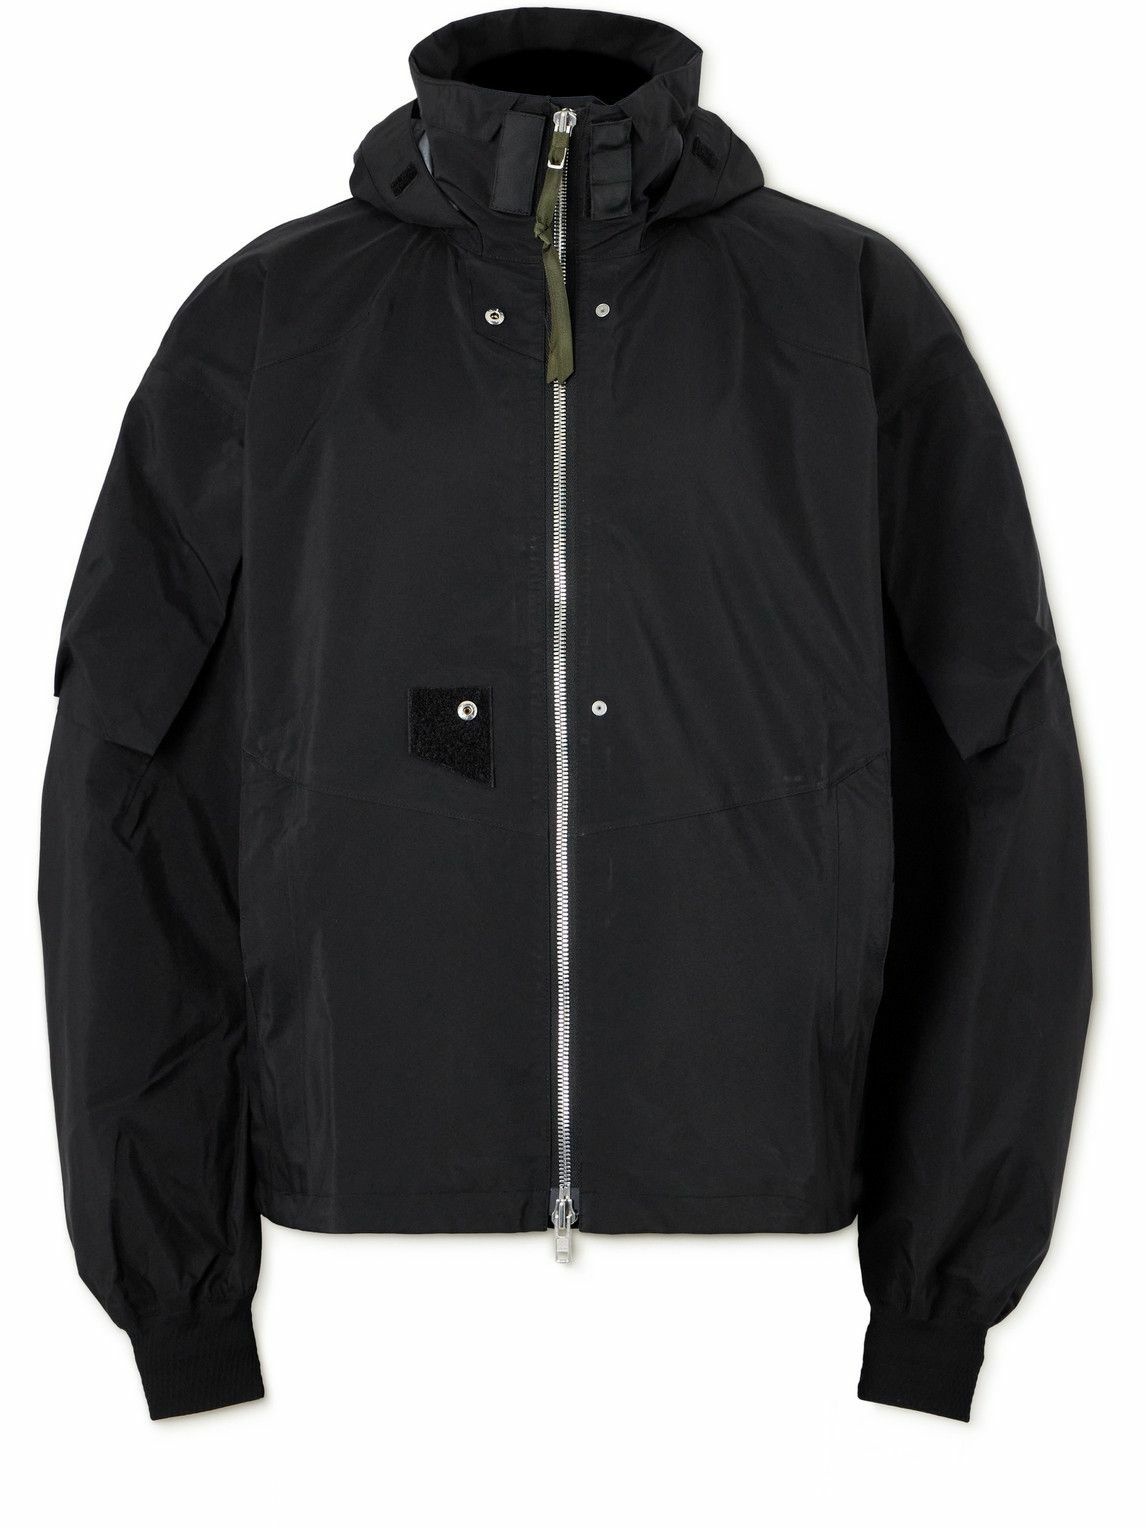 ACRONYM - 3L GORE-TEX PRO® Hooded Jacket - Black